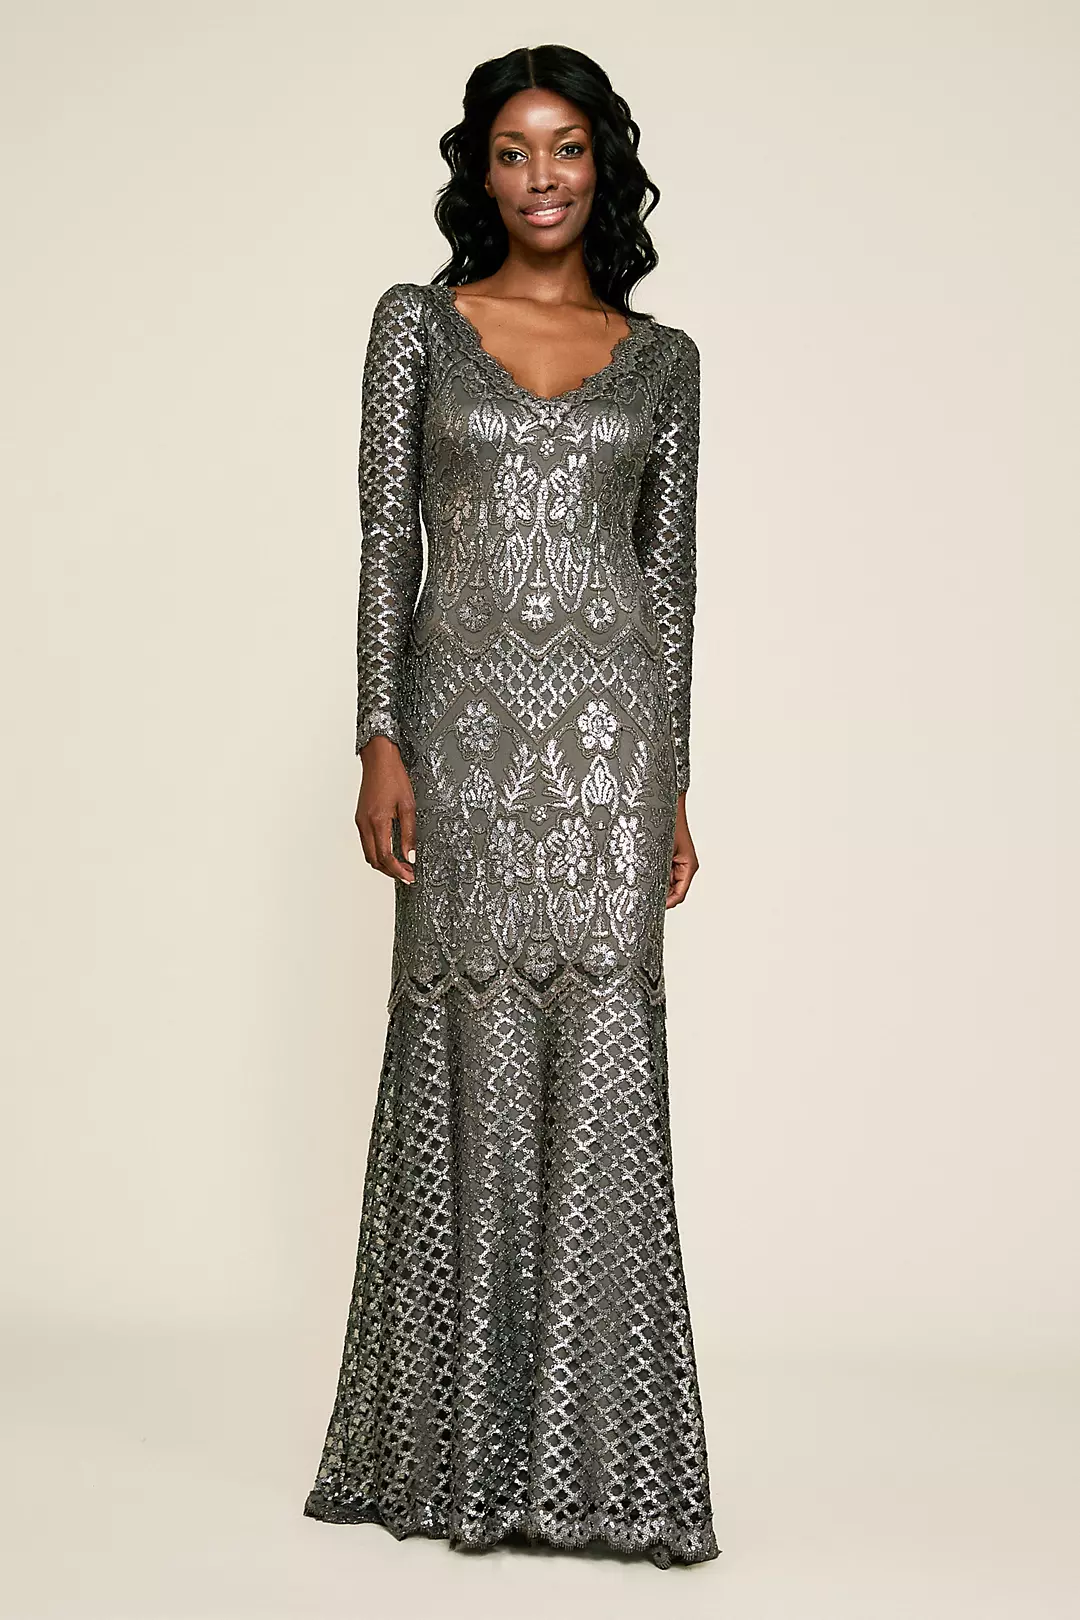 Archer Sequin Gown with Lattice Details Image